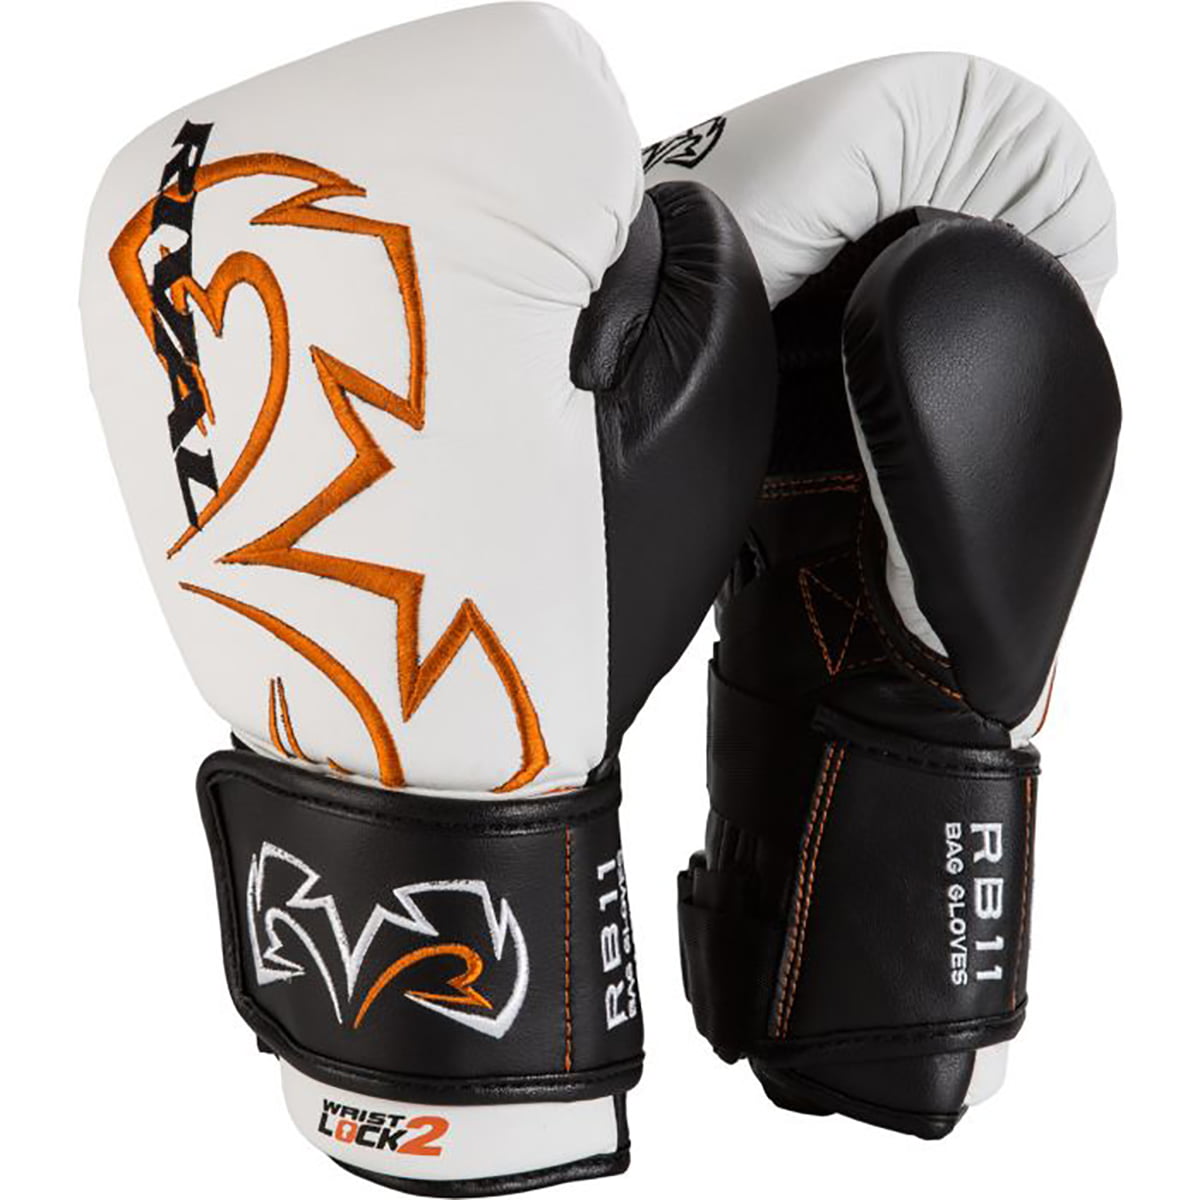 Rival RB11 Evolution Bag Gloves Black Pads Mitts Boxing Training Bag Work 